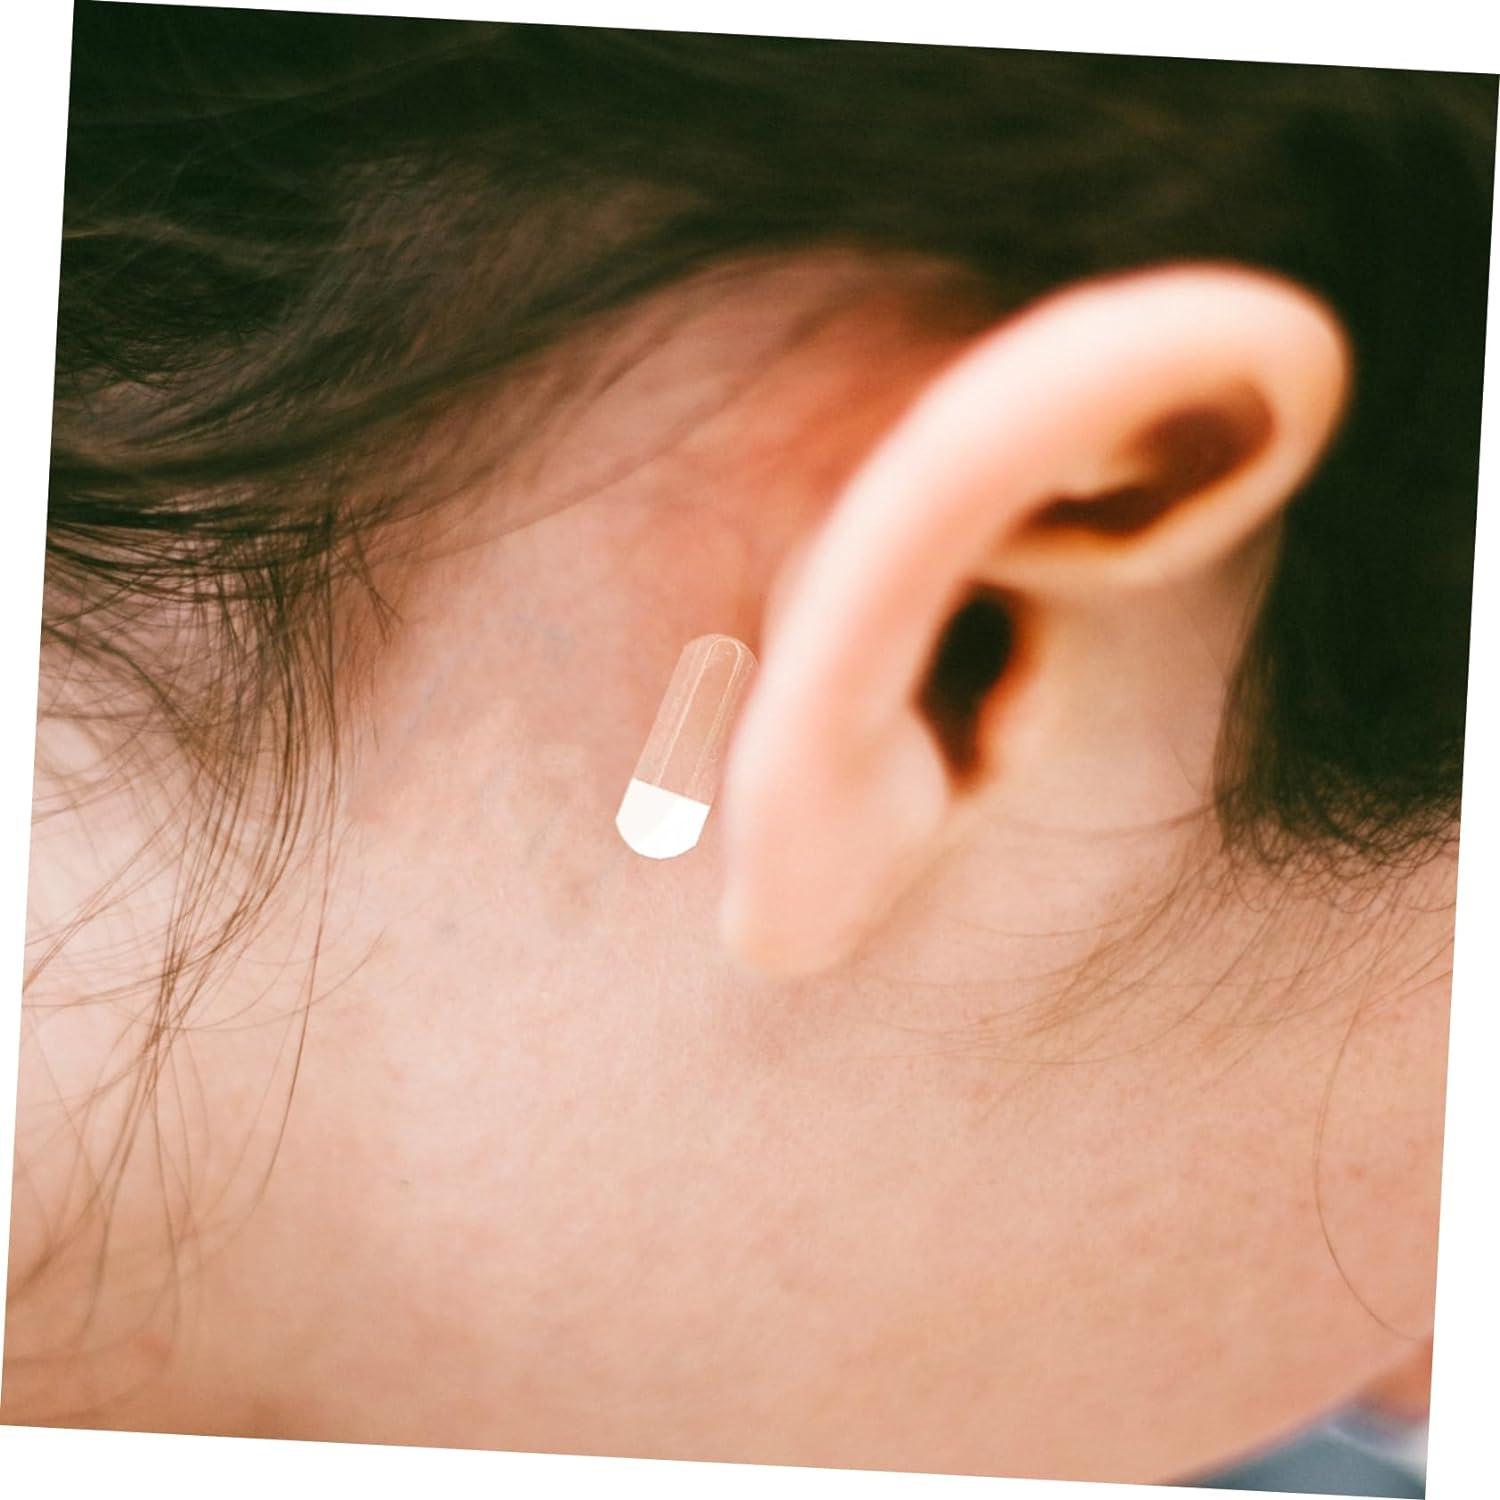 Elf Ear Stickers Veneer Ear Correction Vertical Stand Ear Stickers